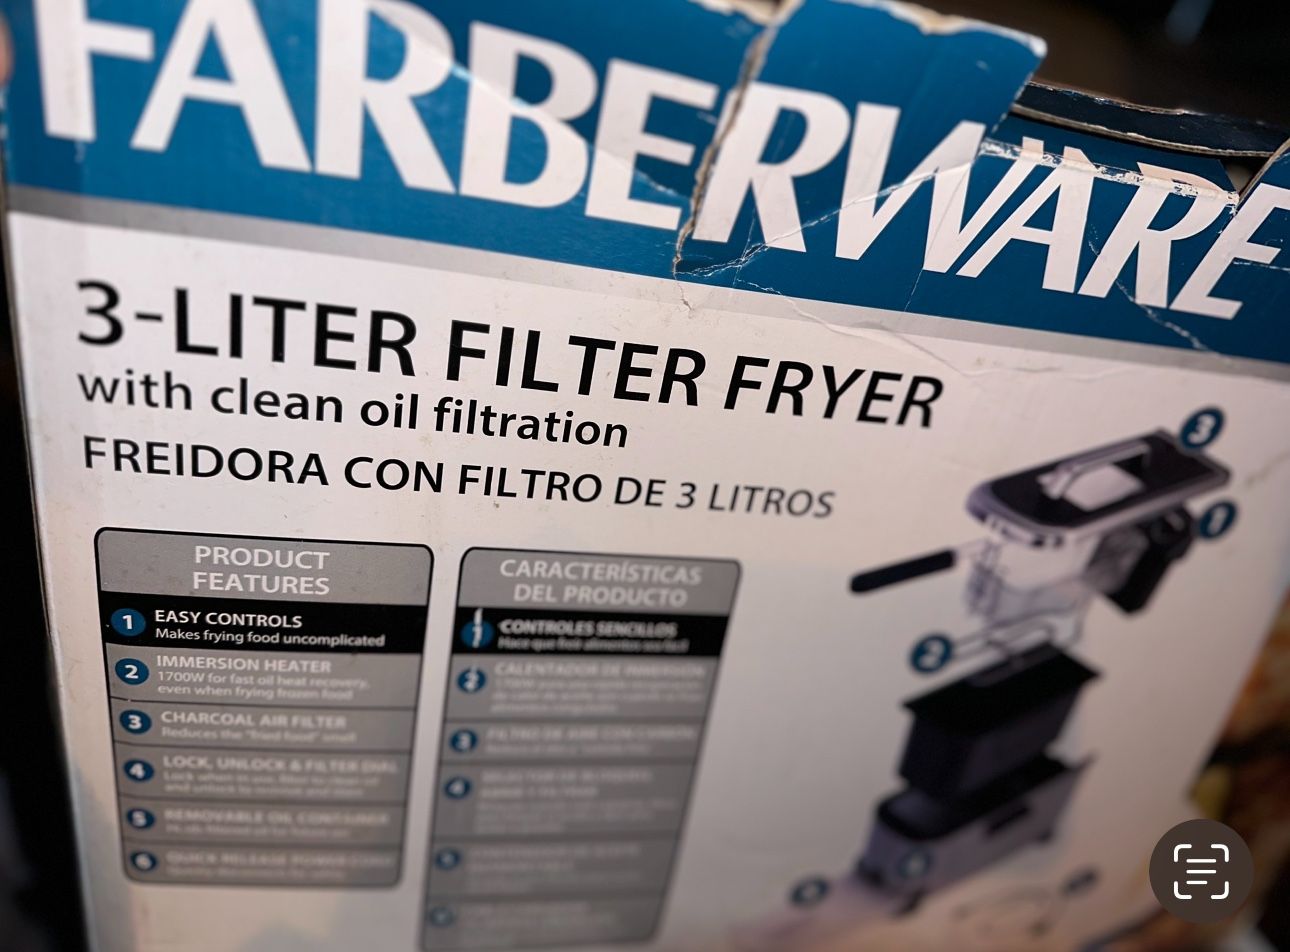 Farberware 3-Liter Filter Fryer, Stainless Steel